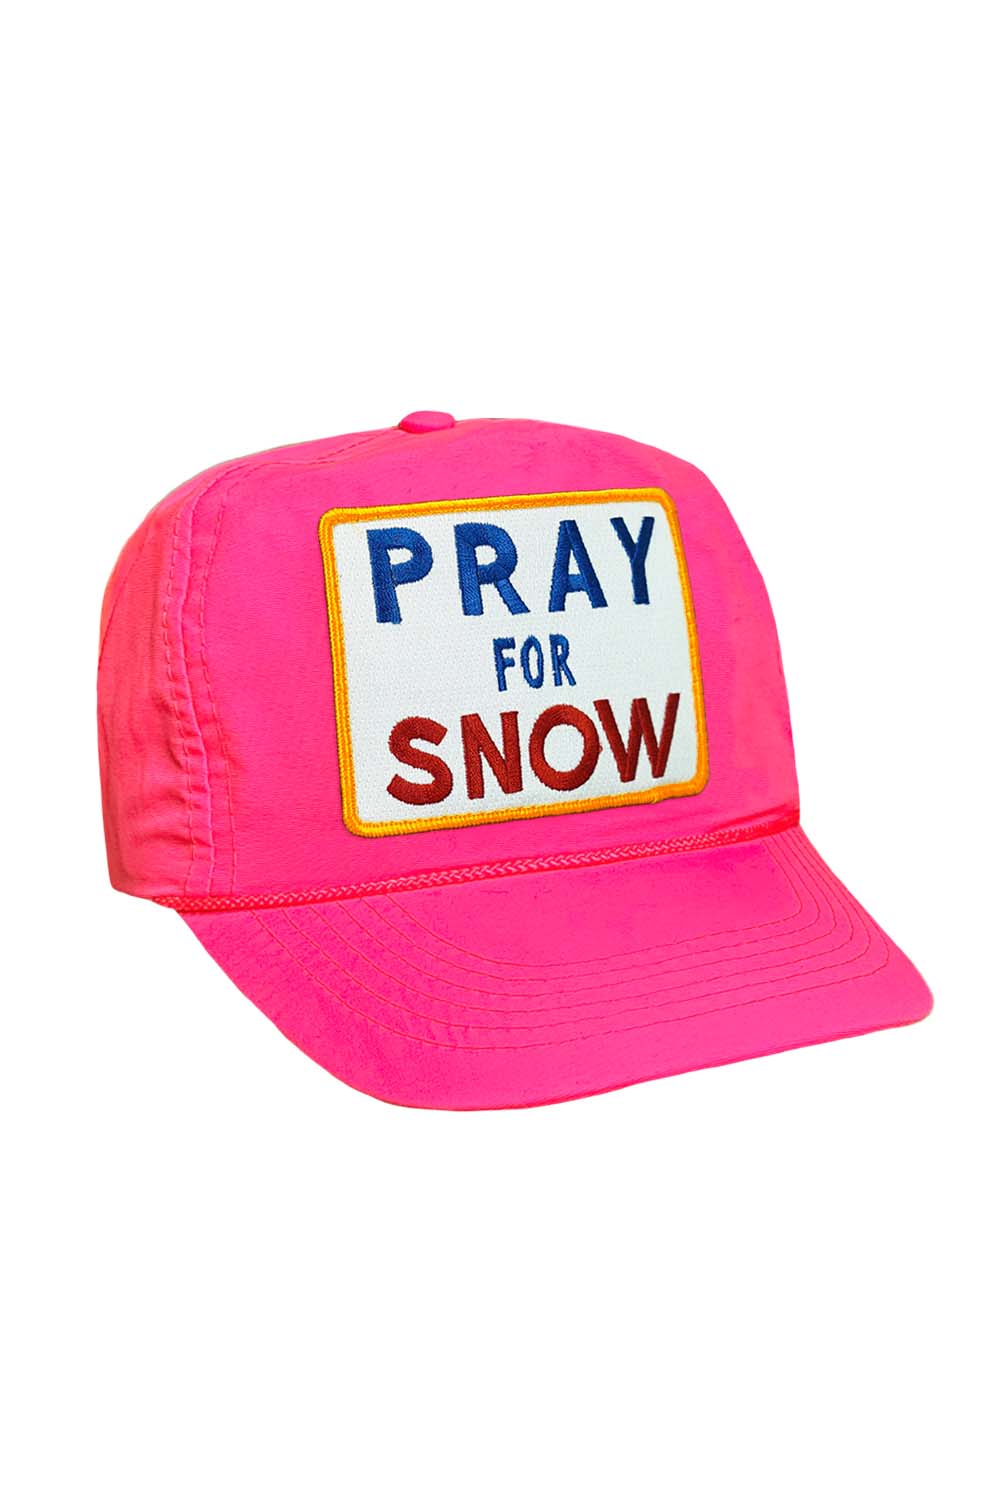 PRAY FOR SNOW - VINTAGE NYLON TRUCKER HAT HATS Aviator Nation NEON PINK 